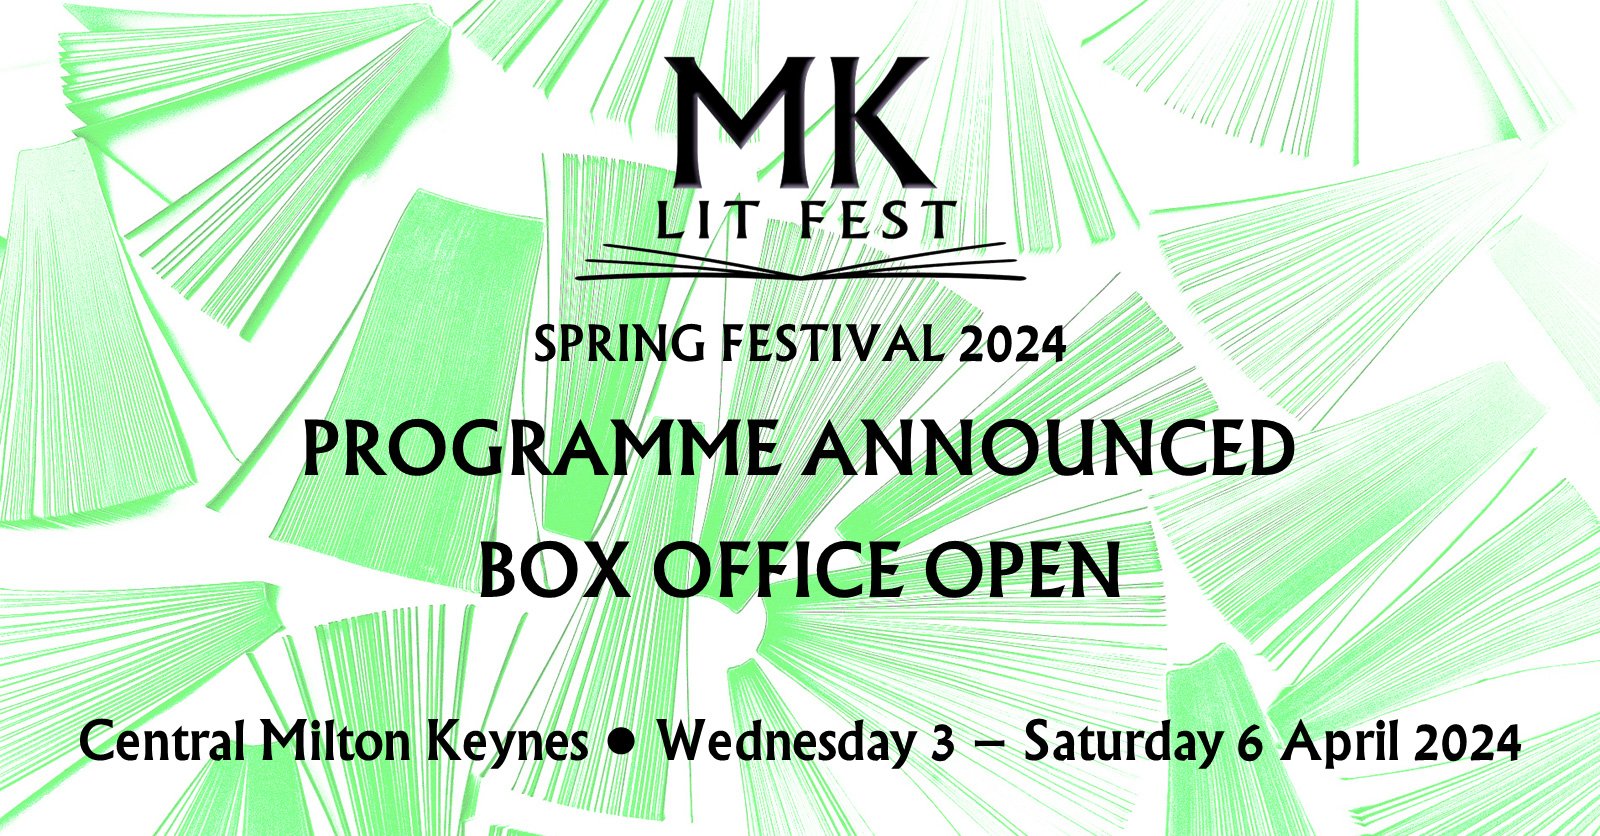 Milton Keynes Literary Festival – Spring Festival 2024 Top Image